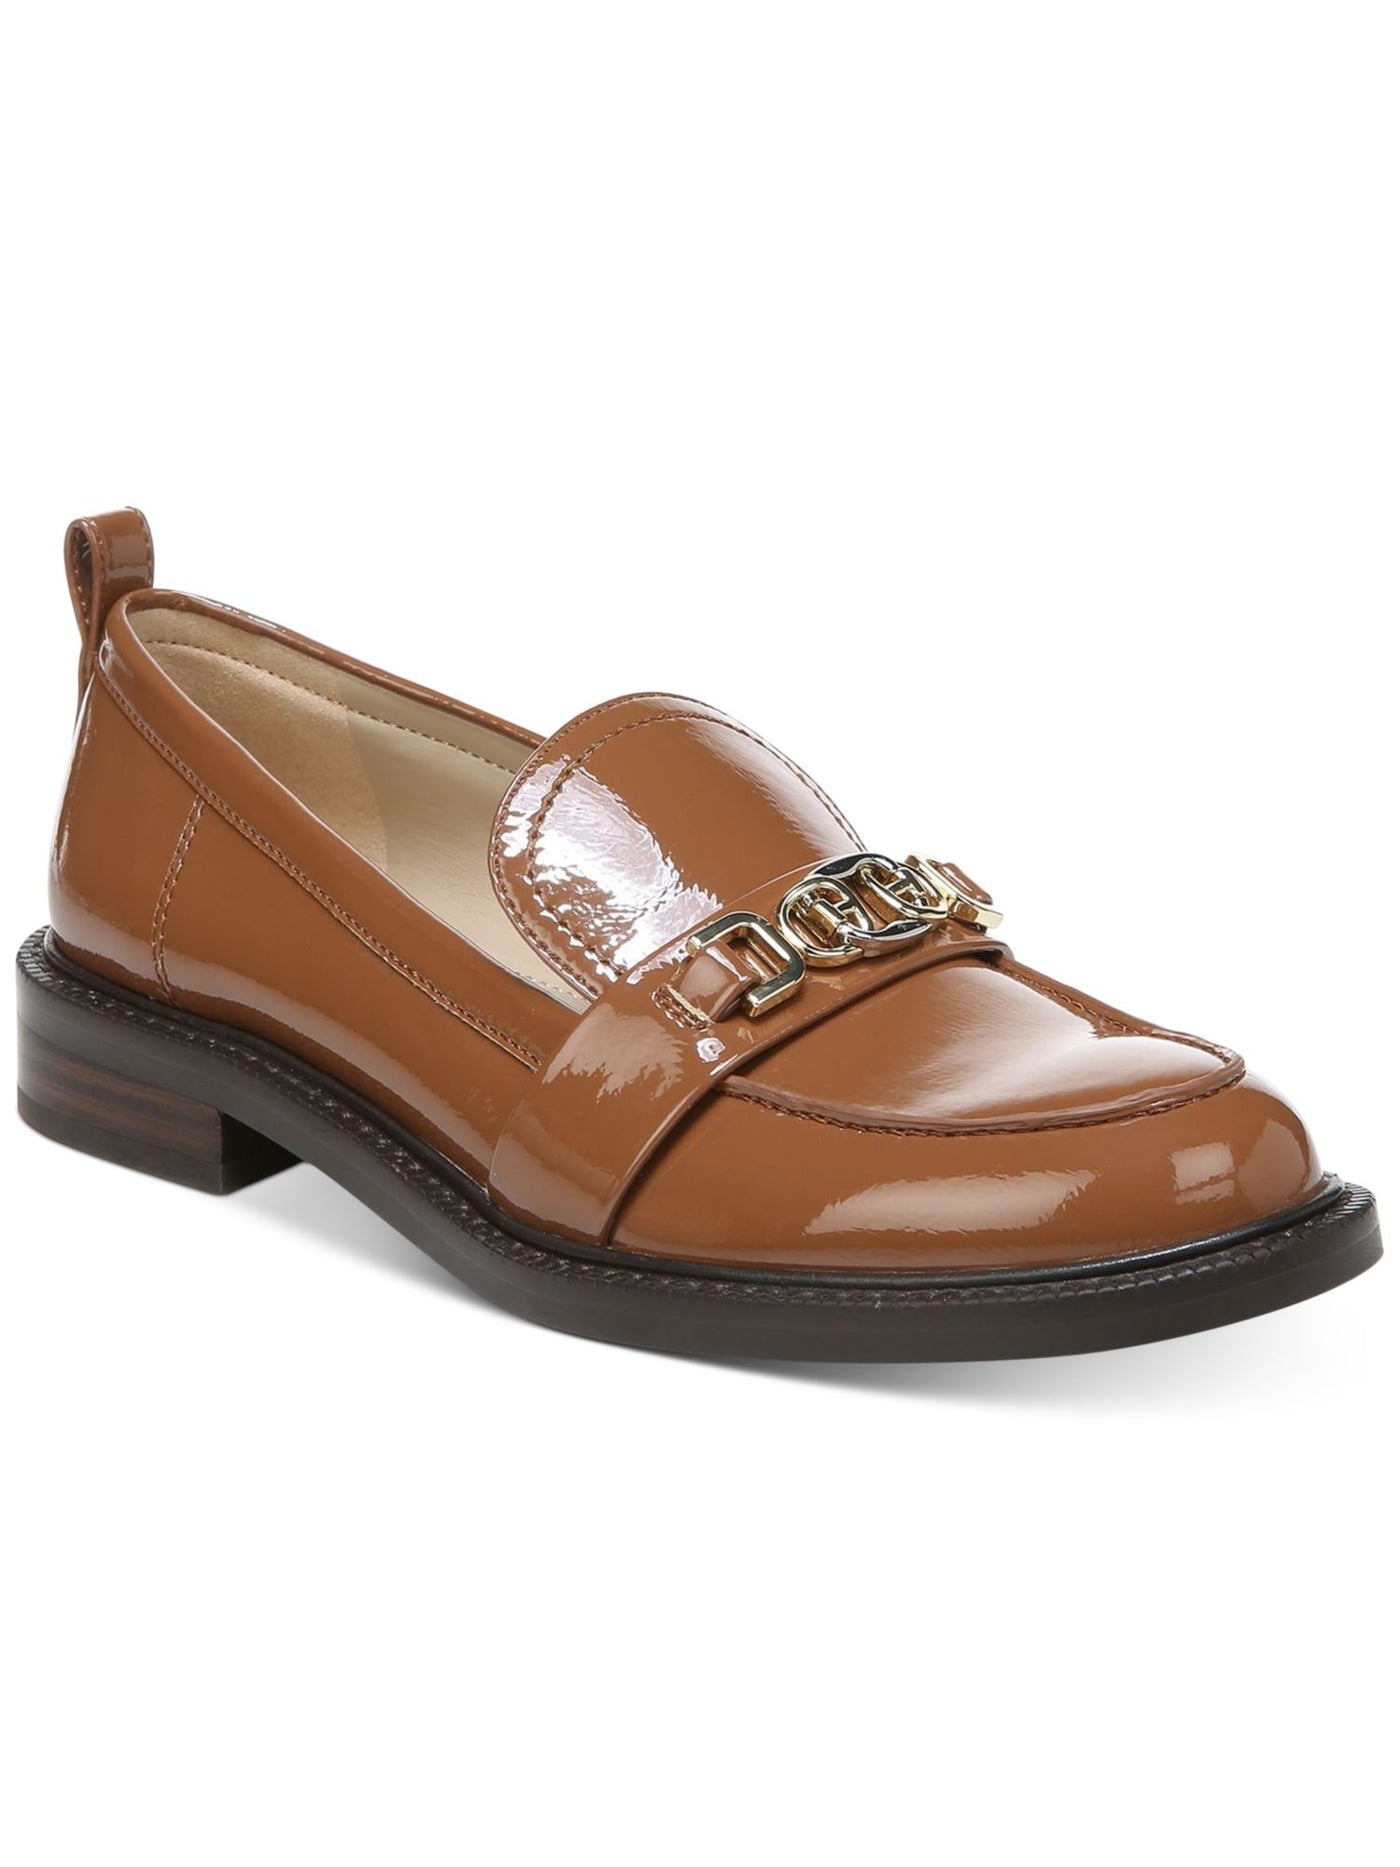 SAM EDELMAN NEW YORK Womens Brown Metallic Ornament Back Pull-Tab Padded Christy Almond Toe Block Heel Slip On Loafers Shoes 5 M